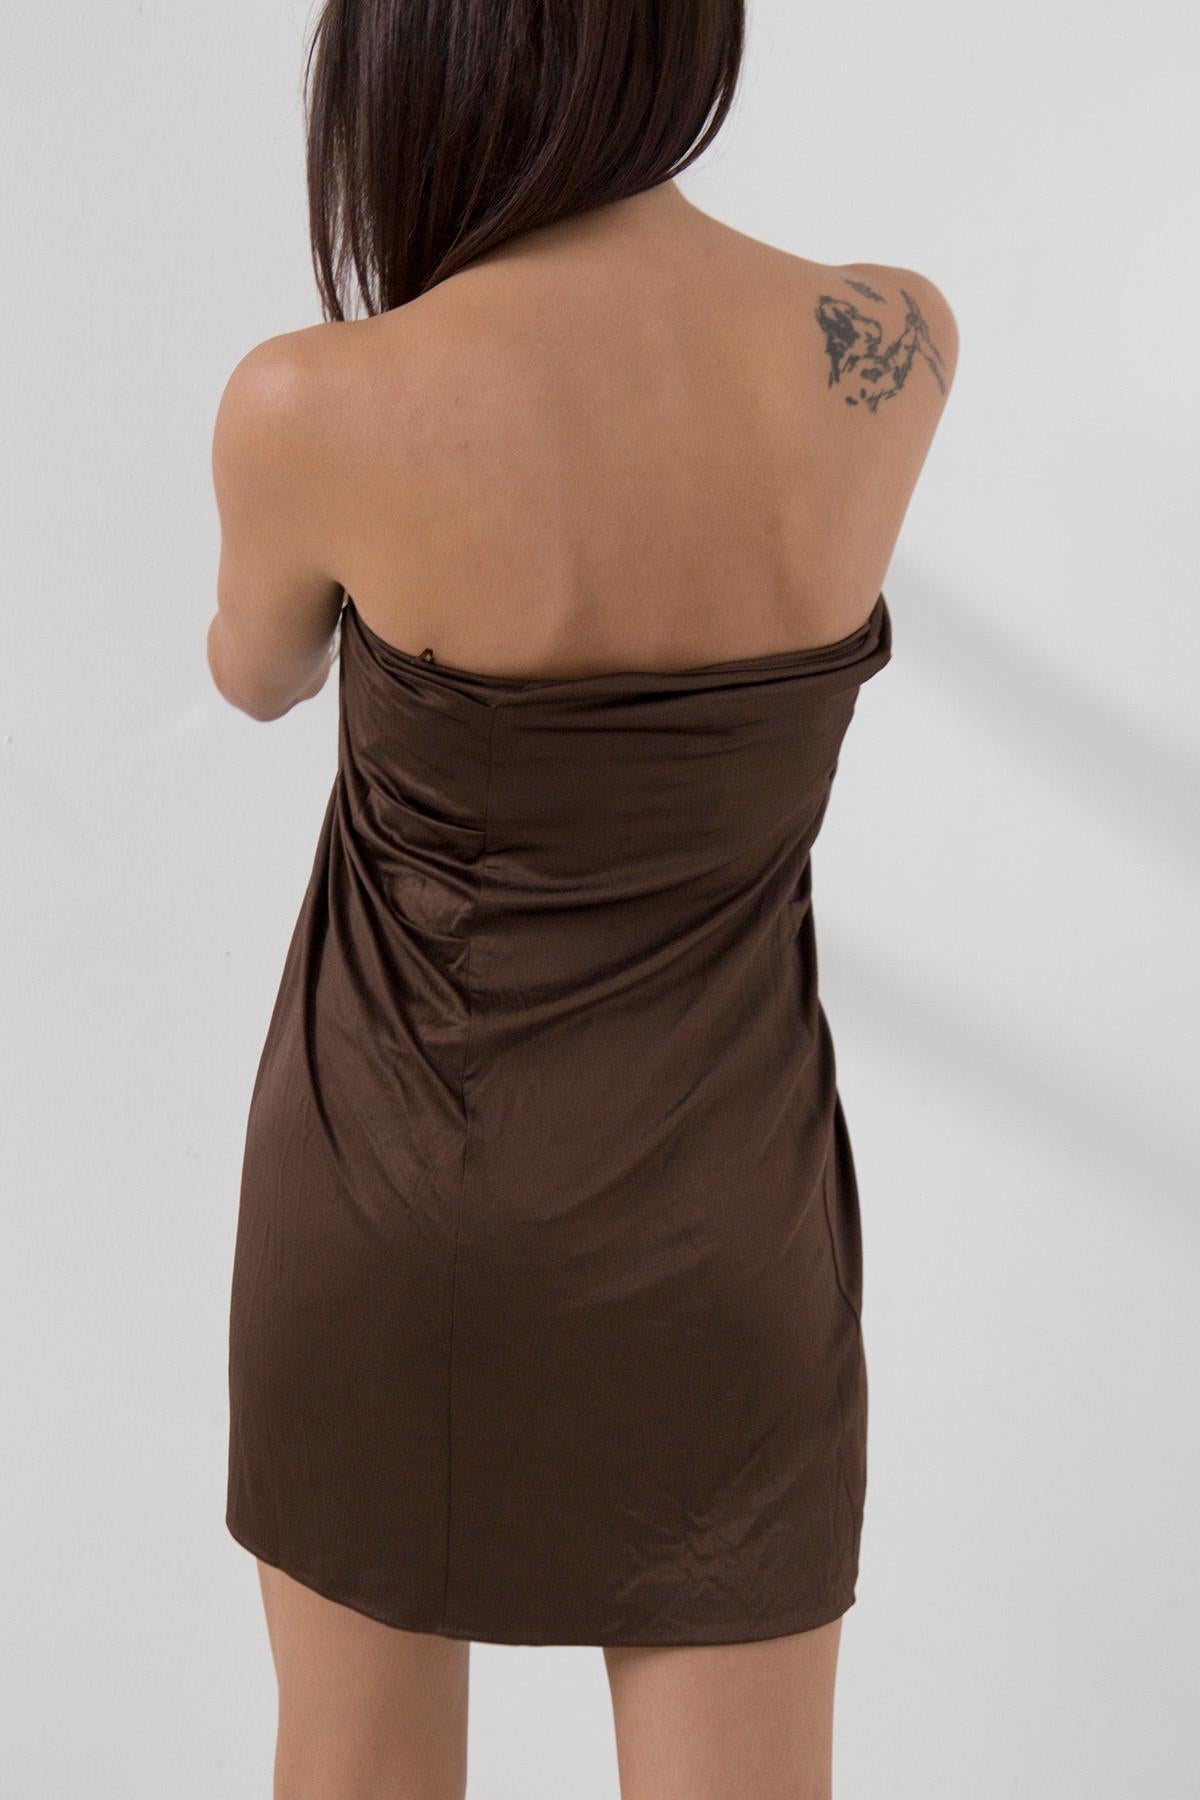 Women's Alberta Ferretti Short Brown Dress For Sale